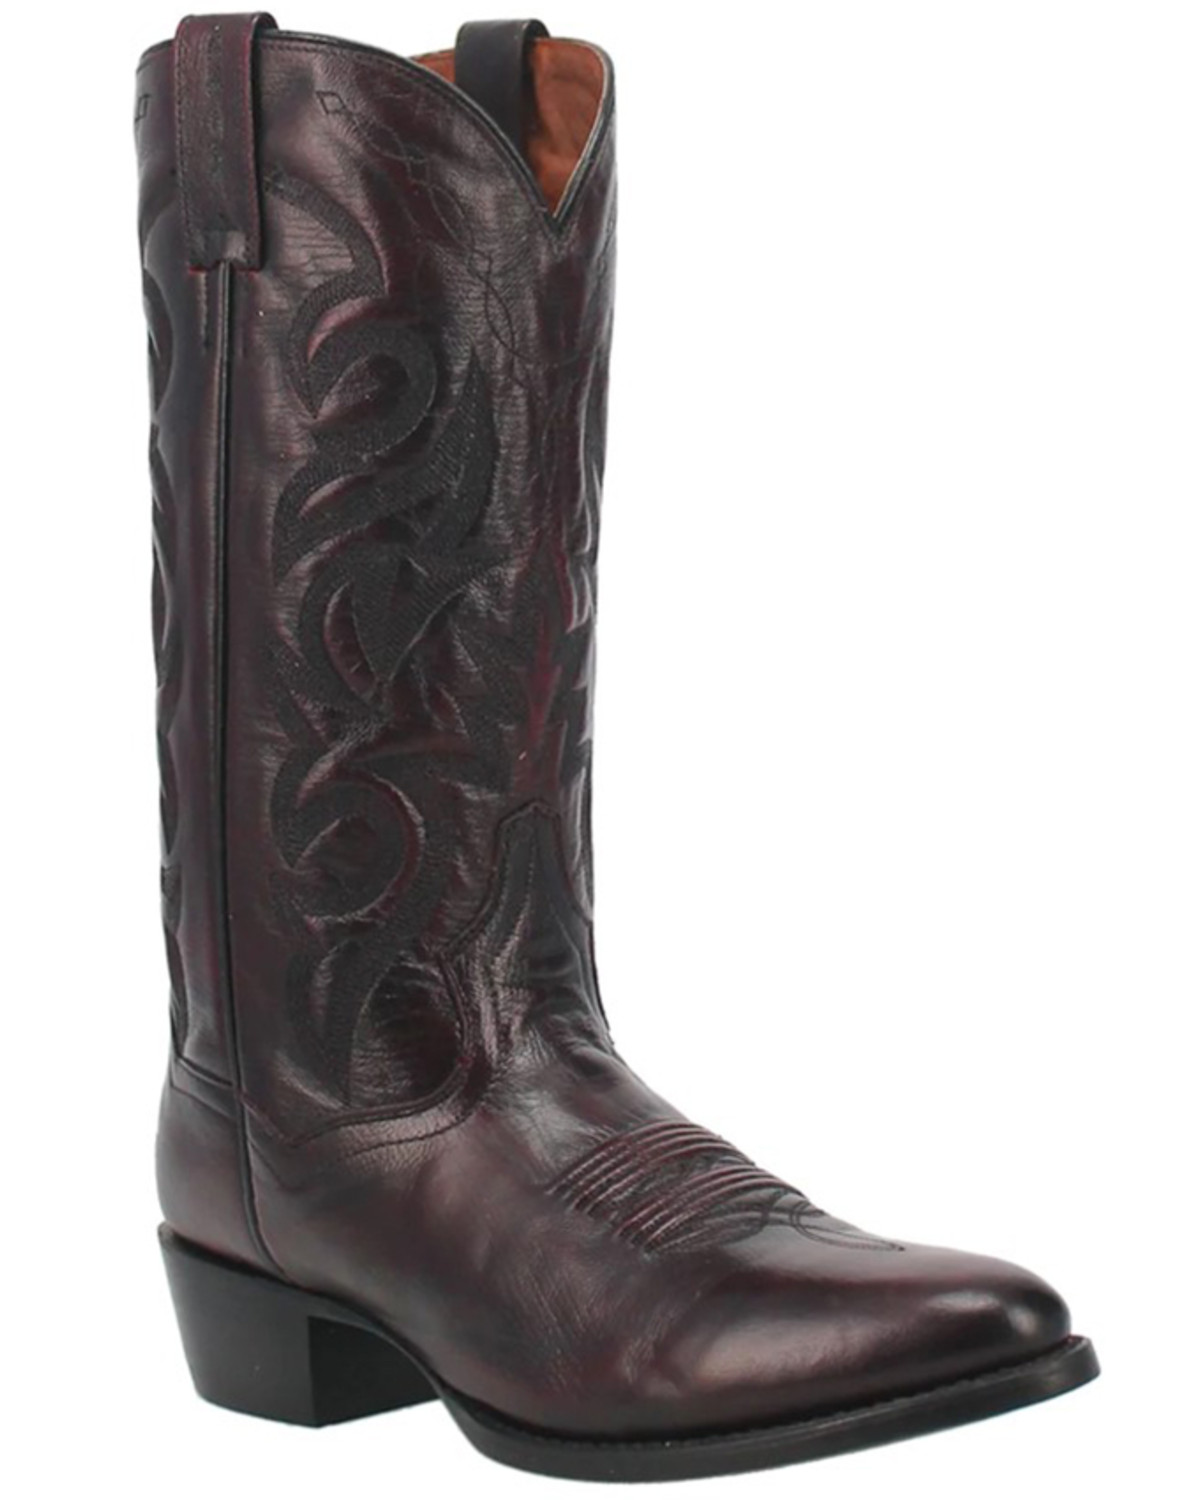 Men's Cowboy Boots - Western Boots | Sheplers